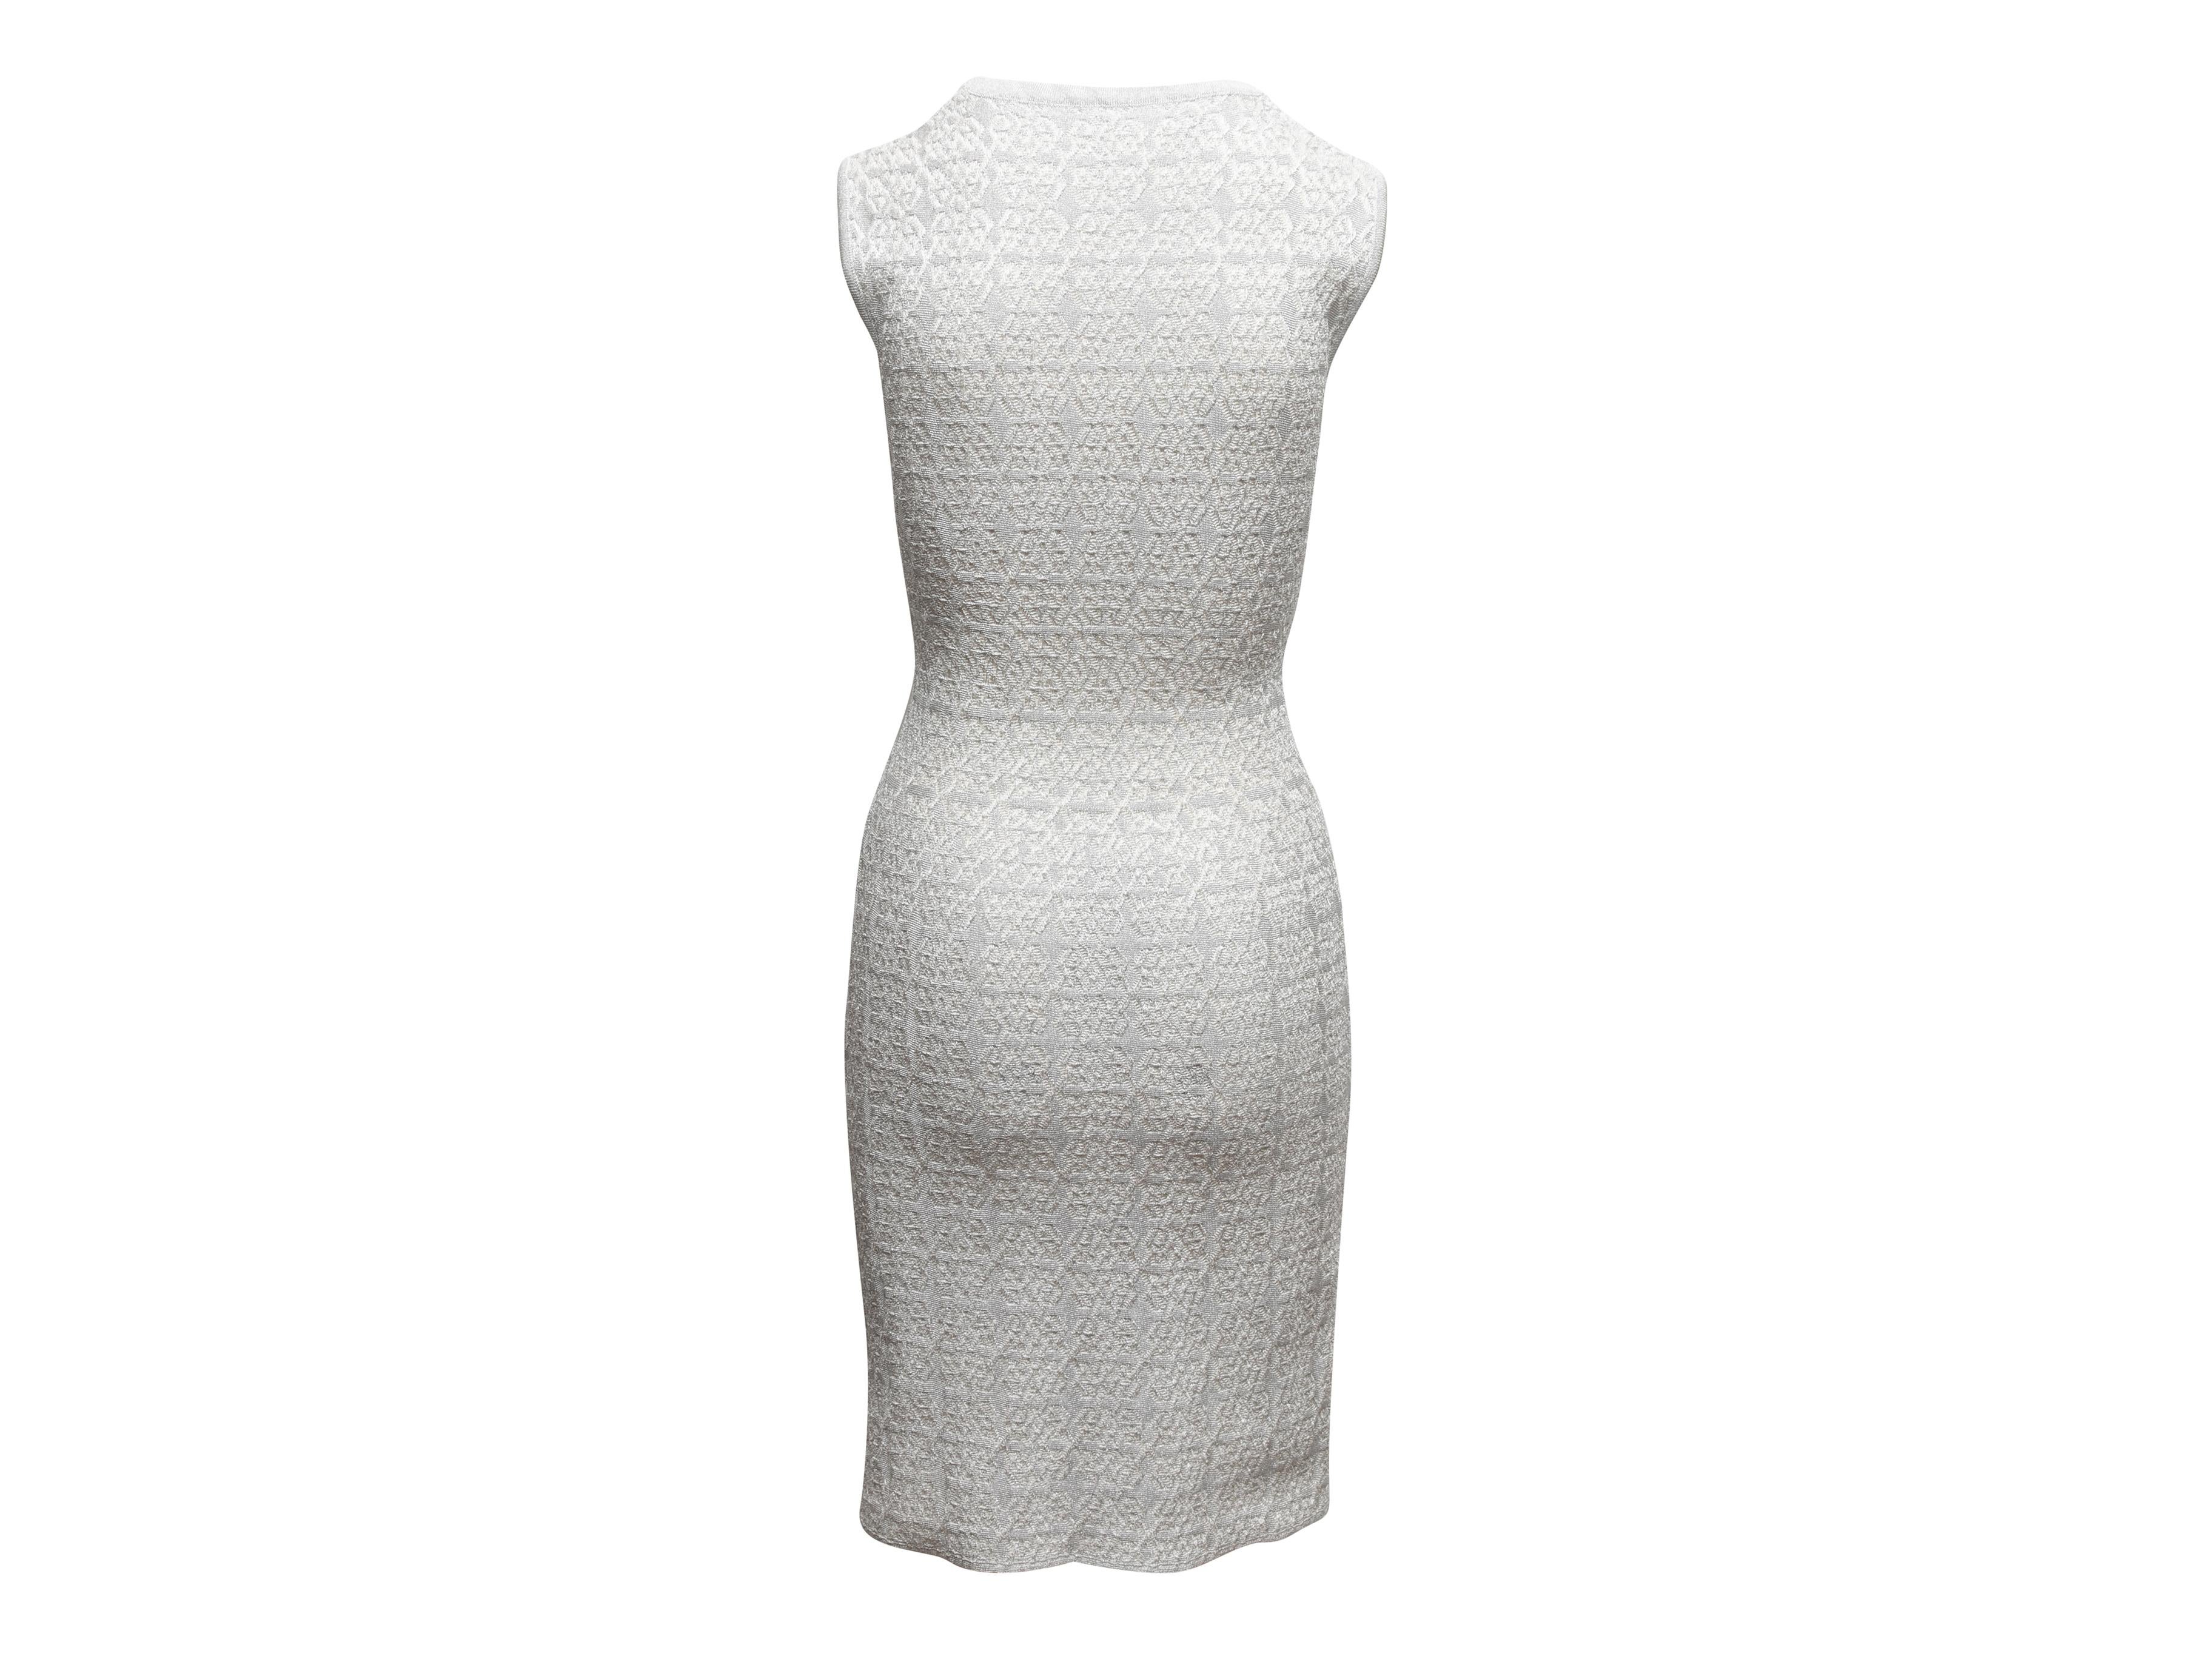 Silver Alaia Knit Sleeveless Dress Size EU 42 1